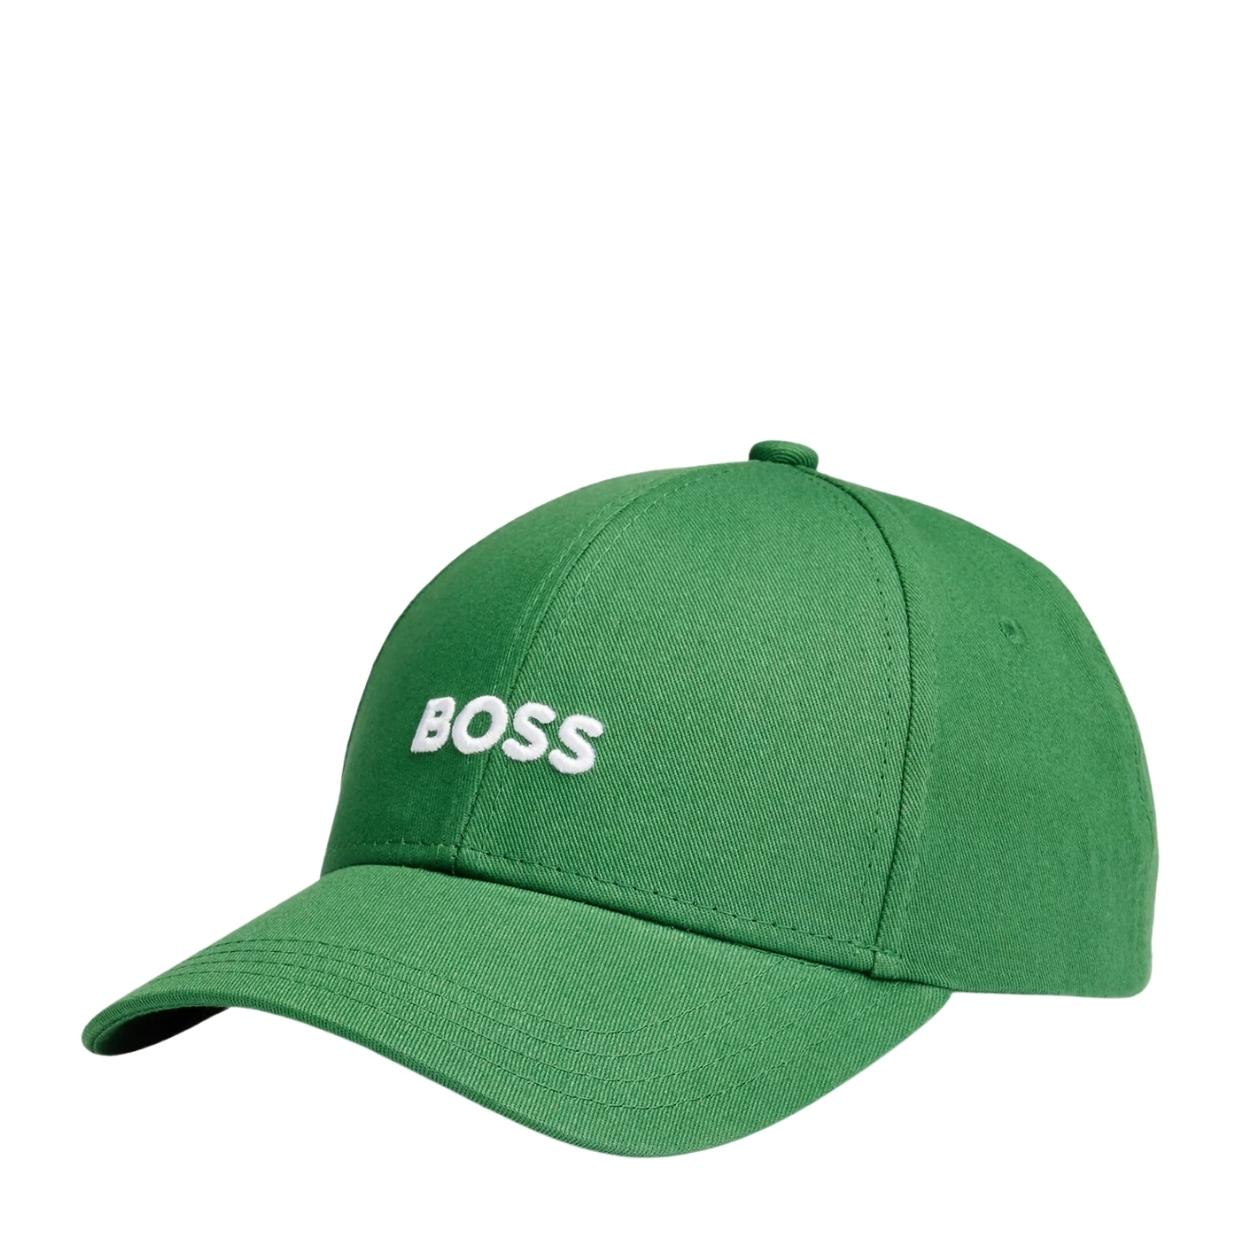 BOSS Zed Embroidered Logo Green Cap